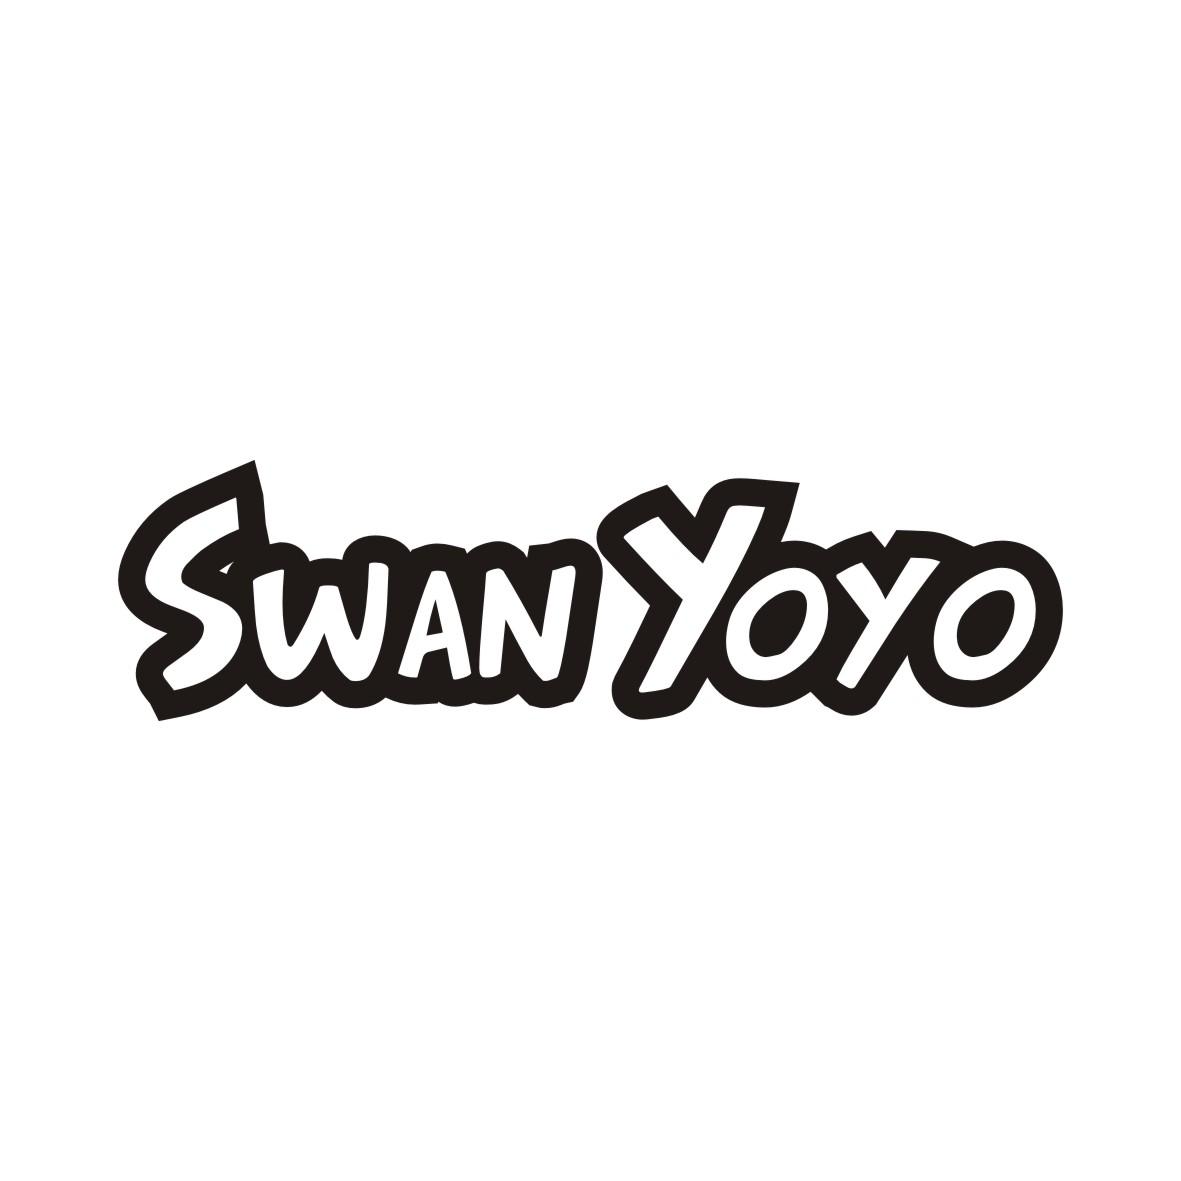 SWAN YOYO商标转让